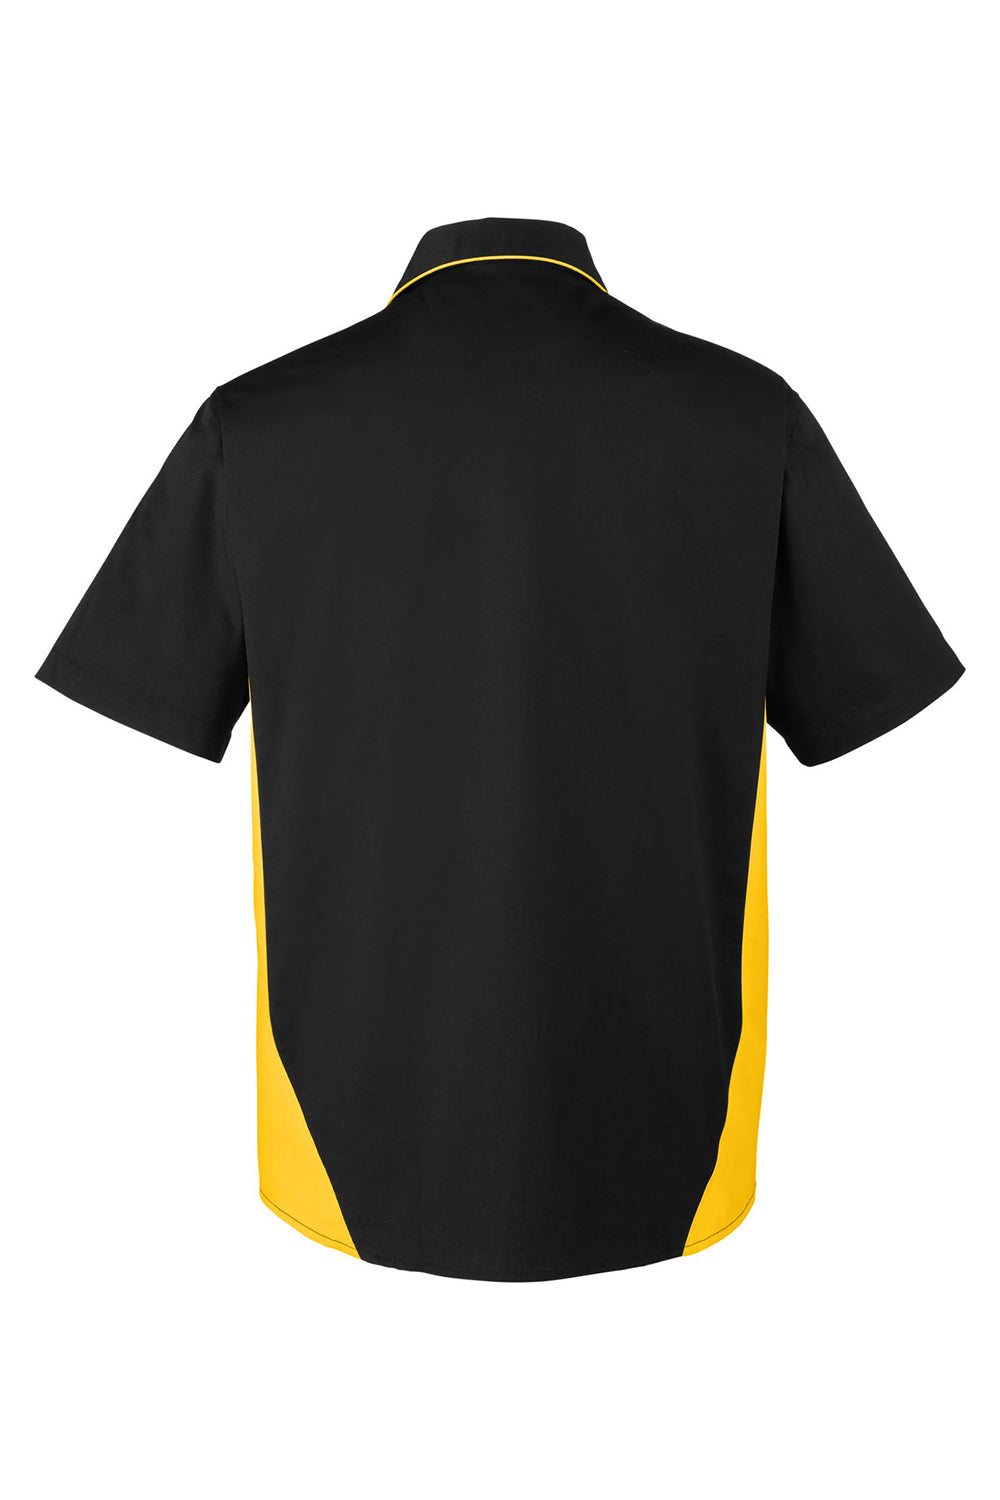 Harriton M586/M586T Mens Flash Colorblock Short Sleeve Button Down Shirt w/ Pocket Black/Sunray Yellow Flat Back